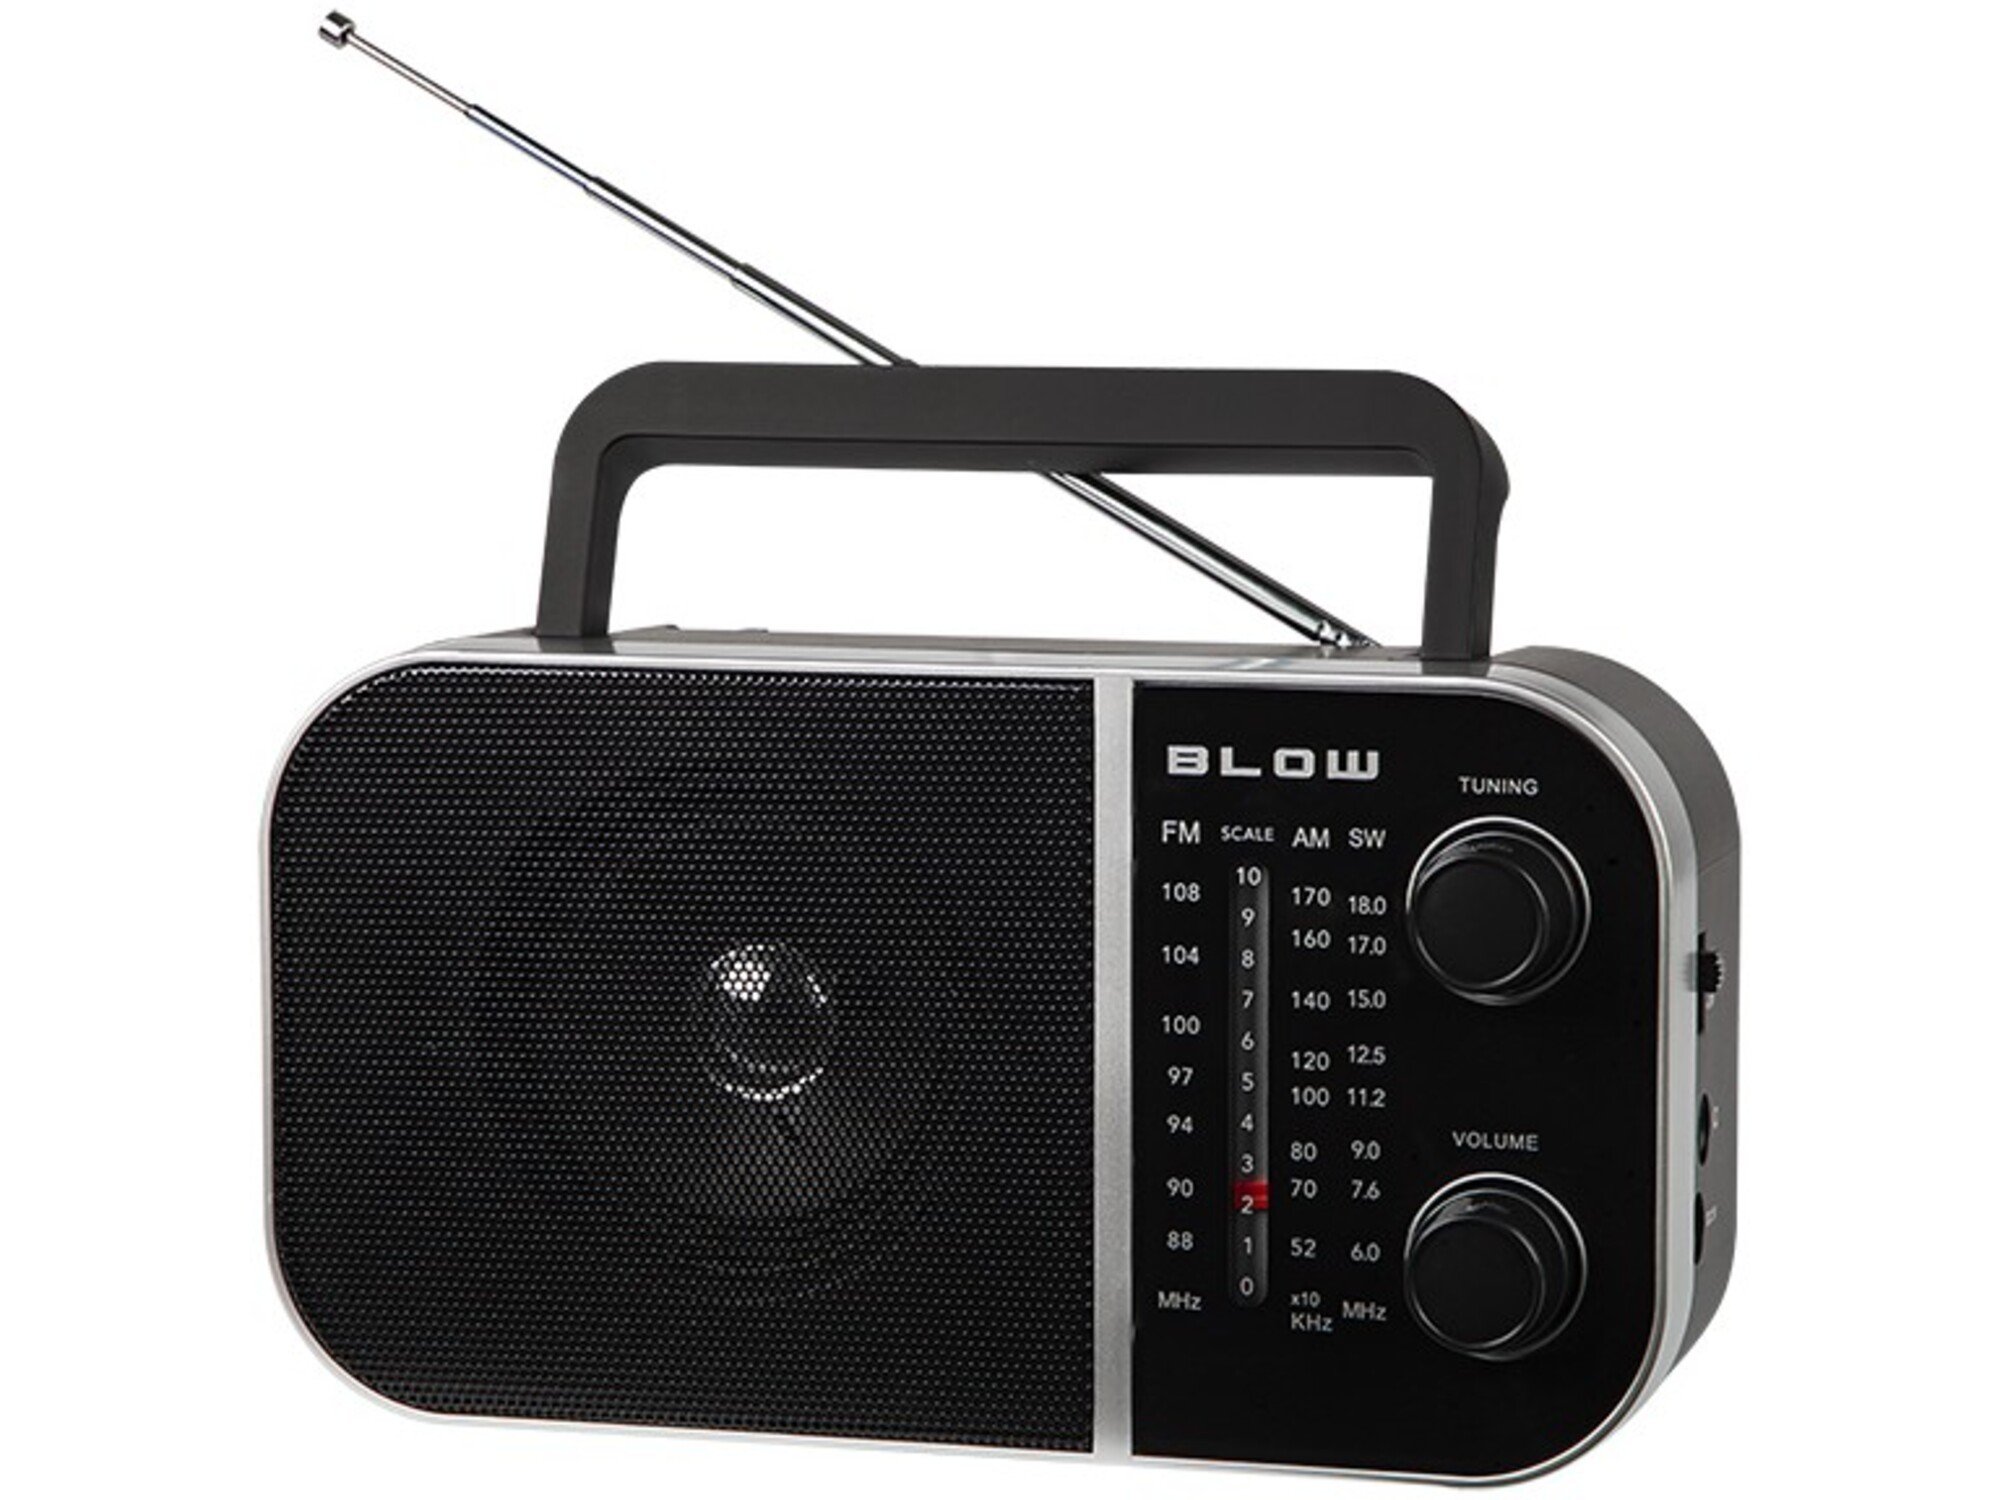 Blow RA6, prenosni radio, AM / FM,